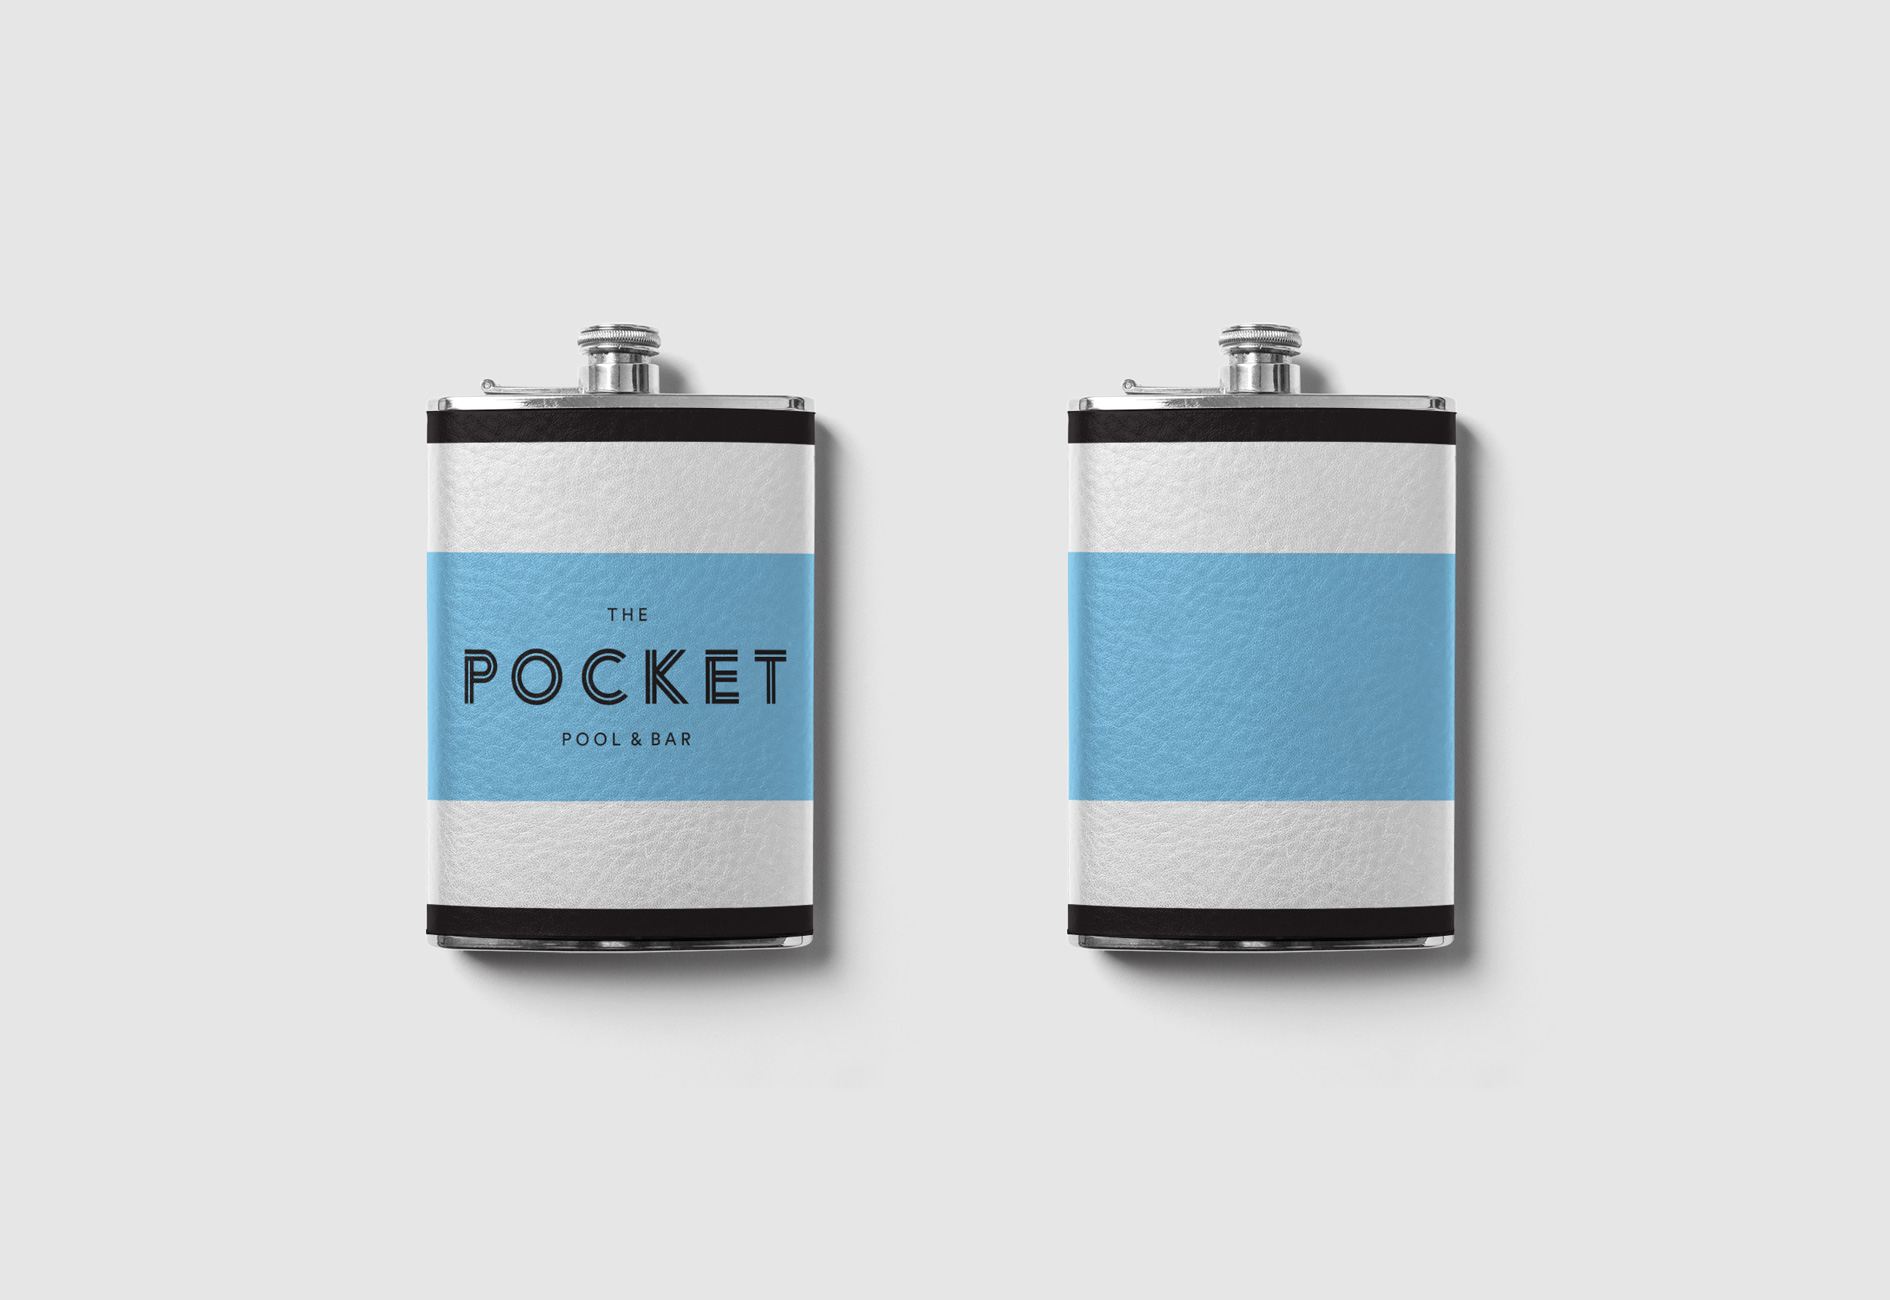 The Pocket Branding designed by Mark Zeff